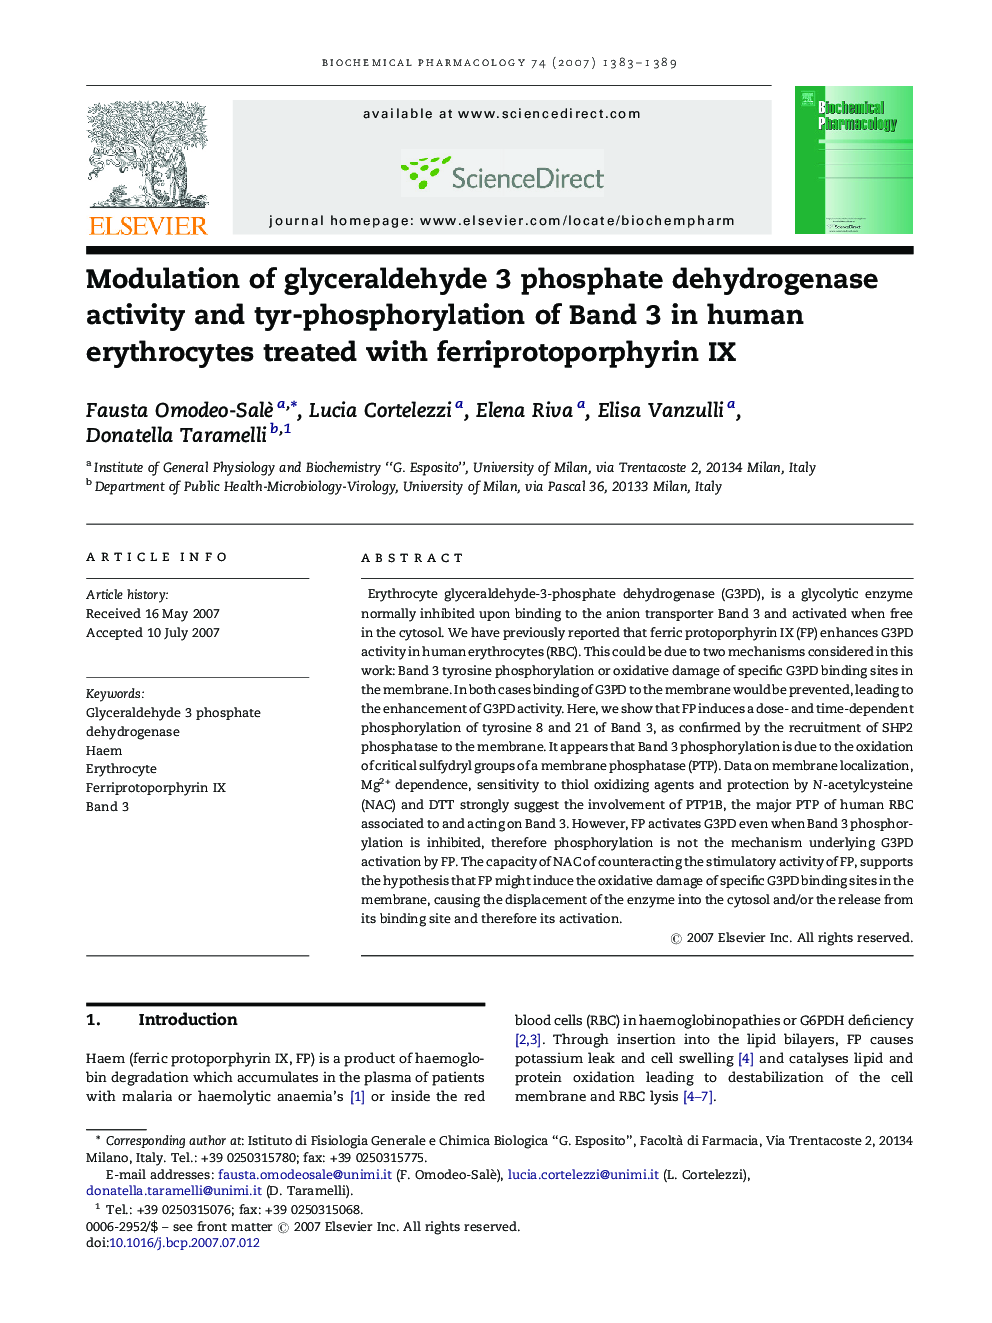 Modulation of glyceraldehyde 3 phosphate dehydrogenase activity and tyr-phosphorylation of Band 3 in human erythrocytes treated with ferriprotoporphyrin IX